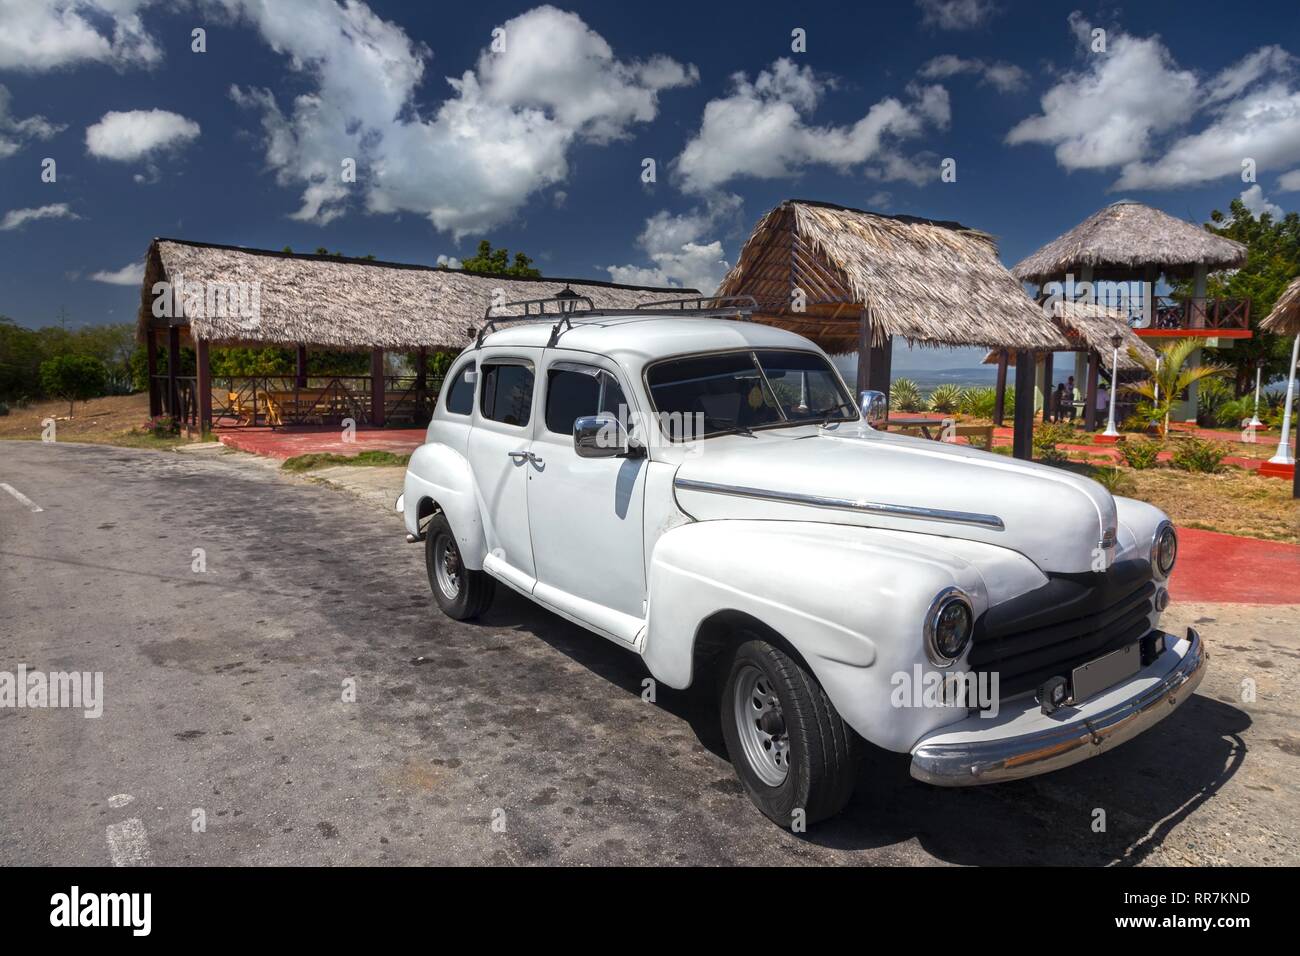 Auto cubana Vintage Old Fashioned White DiRT Road. Shack Houses Blue Skyline White Clouds Guantanamo Bay Cuba Landscape Foto Stock